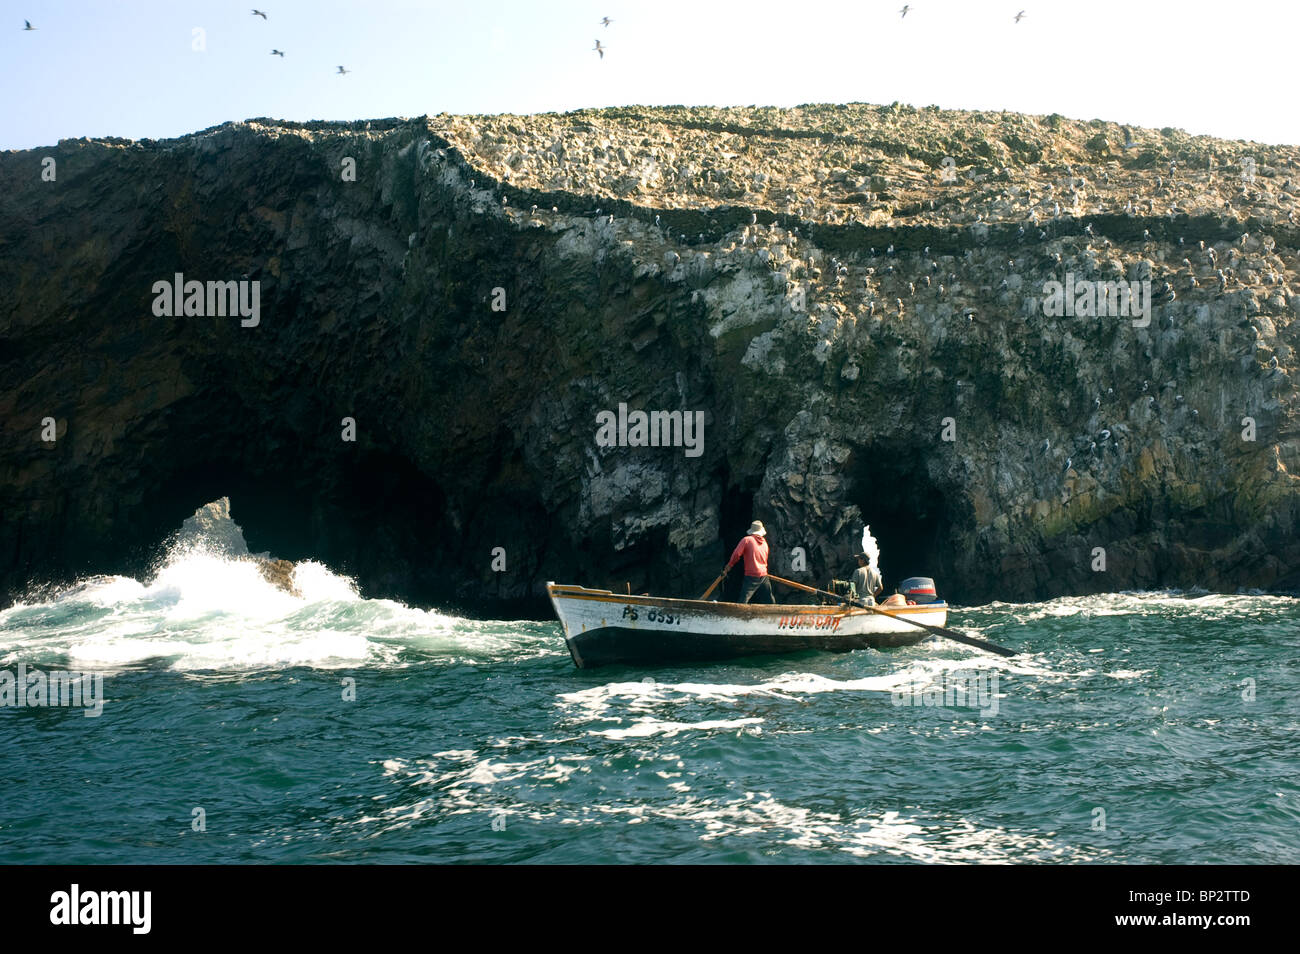 Fishermen risk their lives at the guano islands of Ballestas, Reserva Nacional de Paracas, Peru. Stock Photo